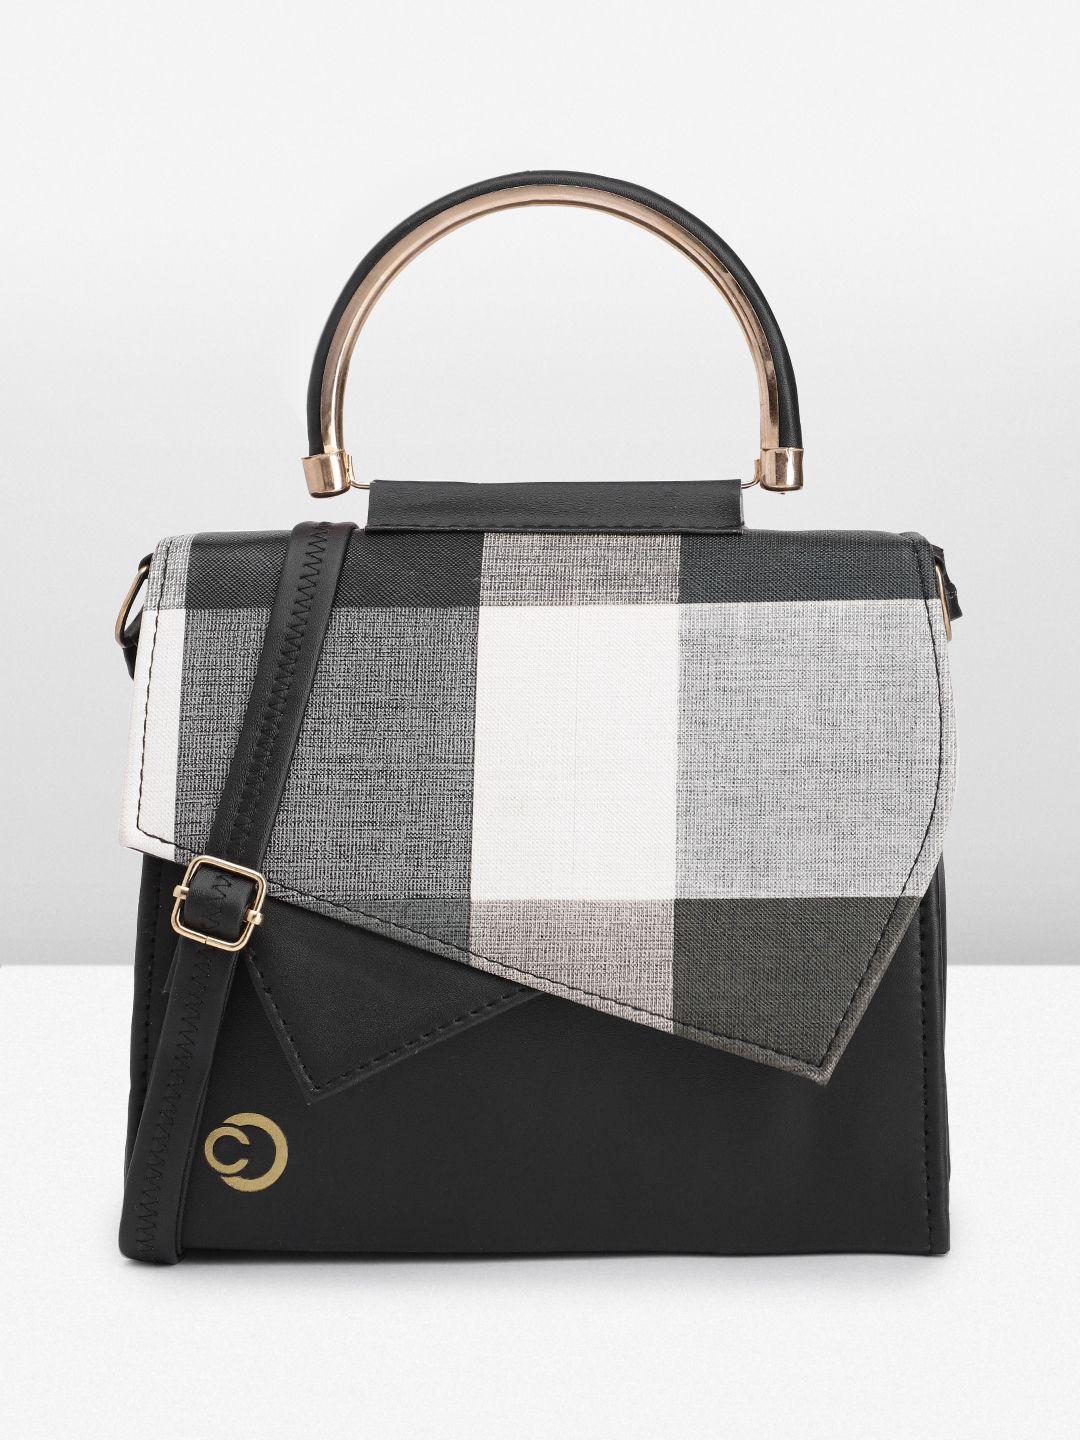 caprese geometric printed structured satchel